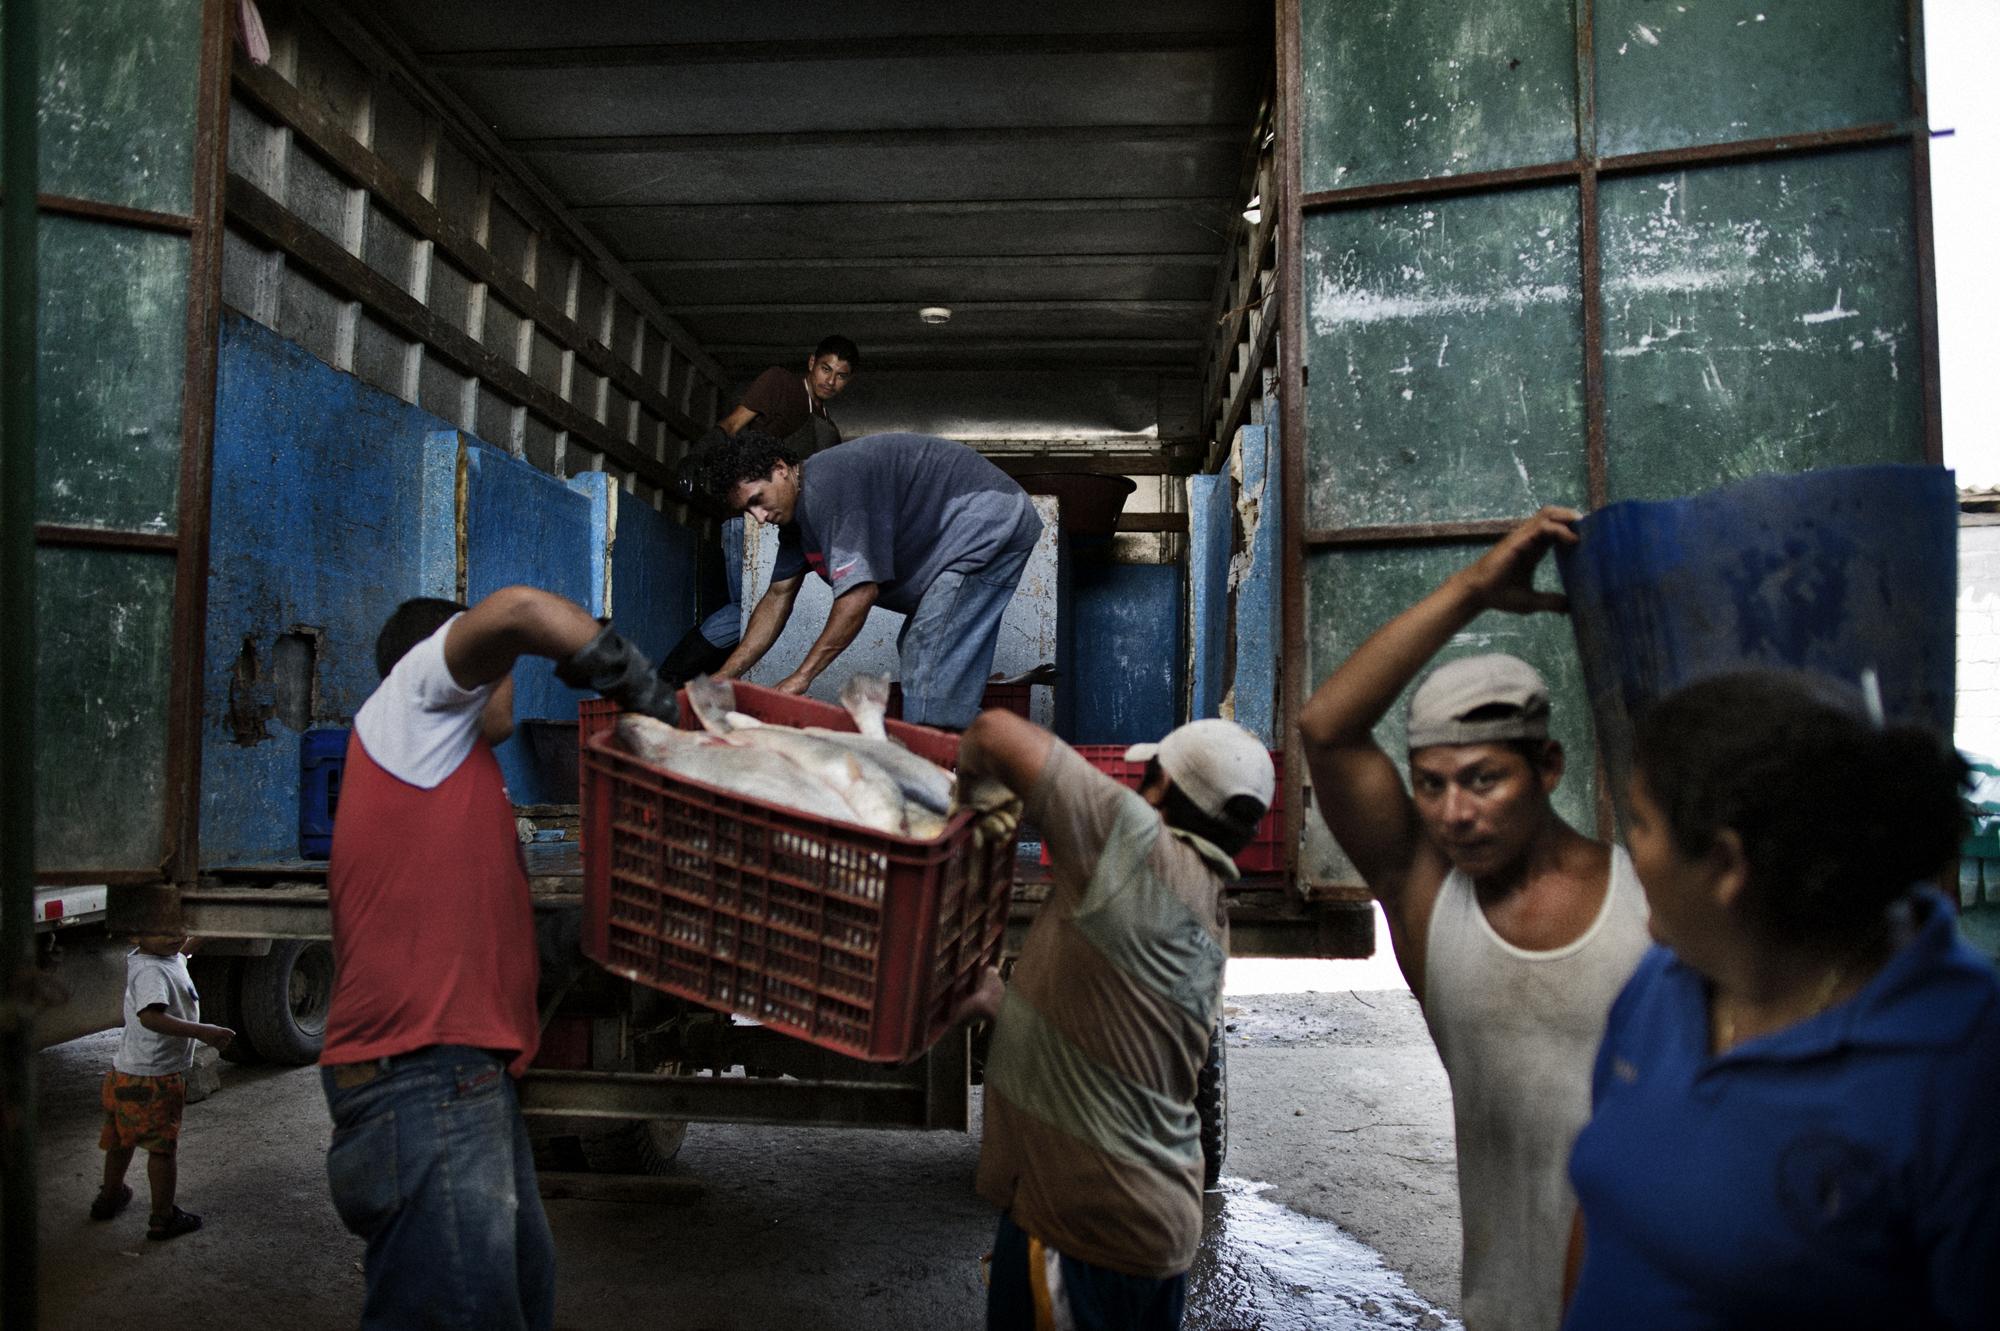 Microcredit / Central America - Totogalpa, Honduras.
October 2010.
Men loading a truck...